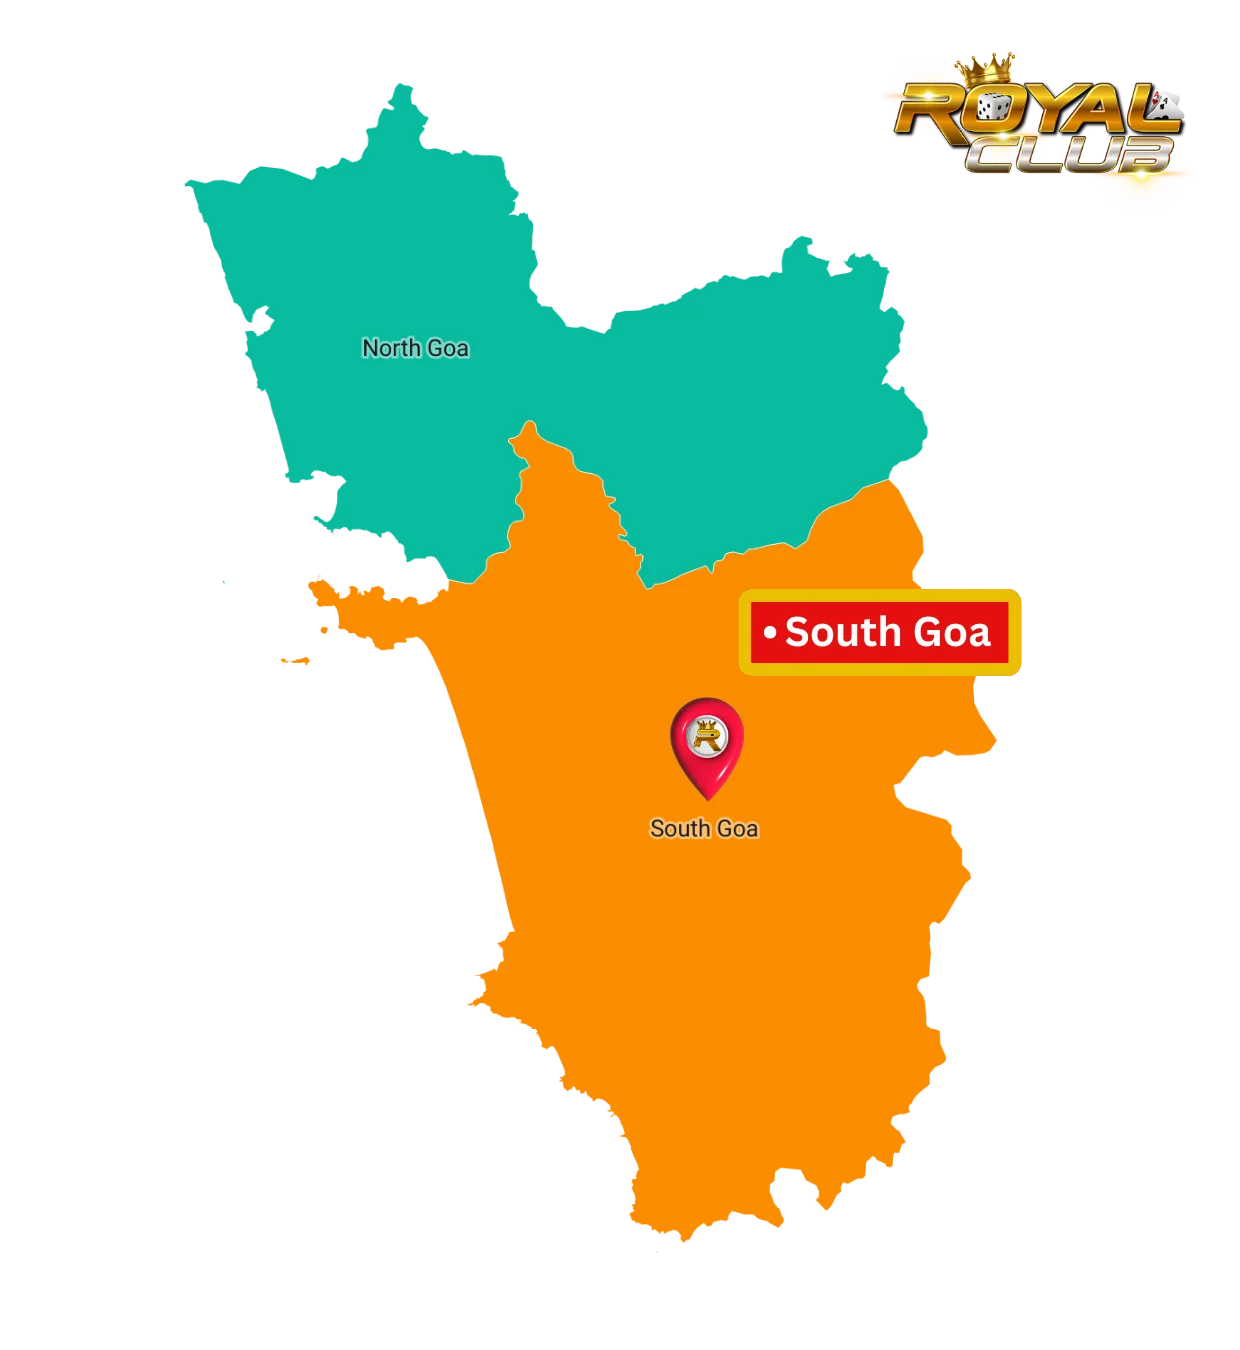 Aviator Game in South Goa